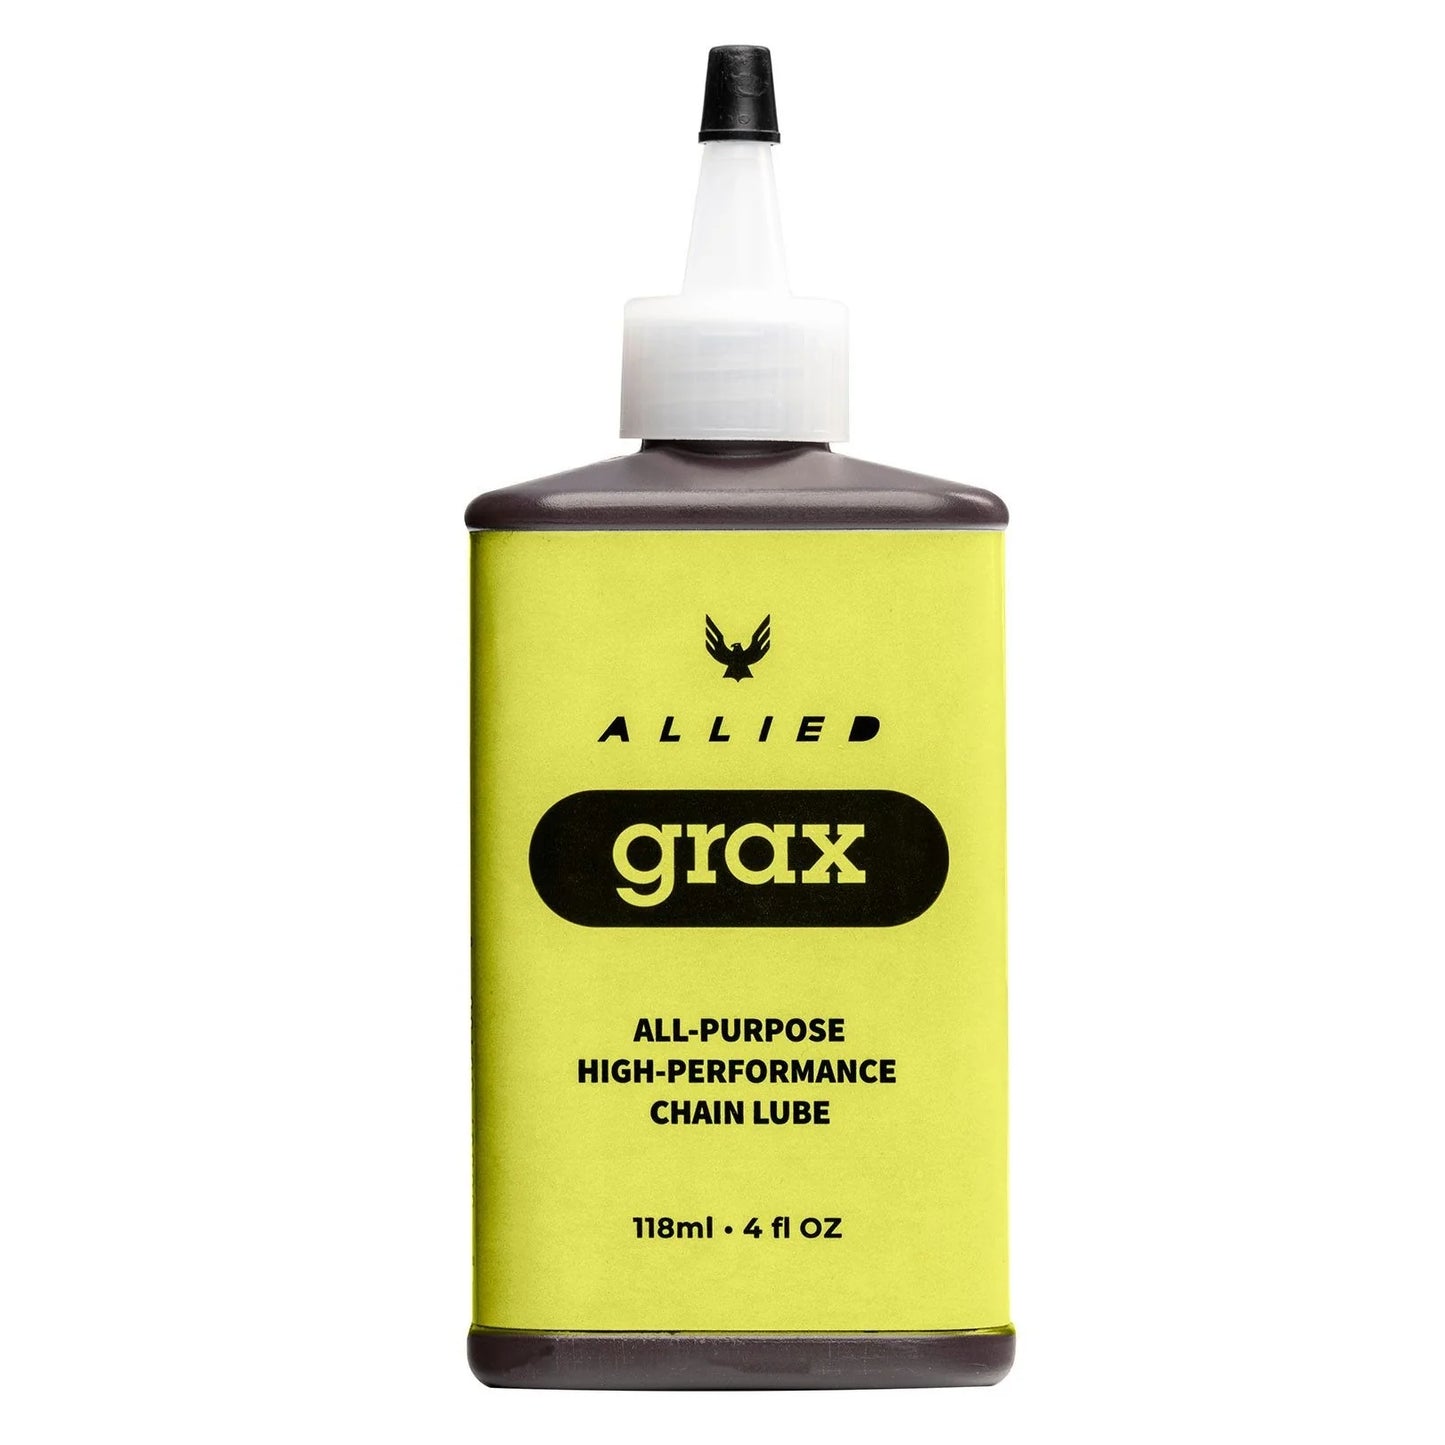 Grax Chain lube